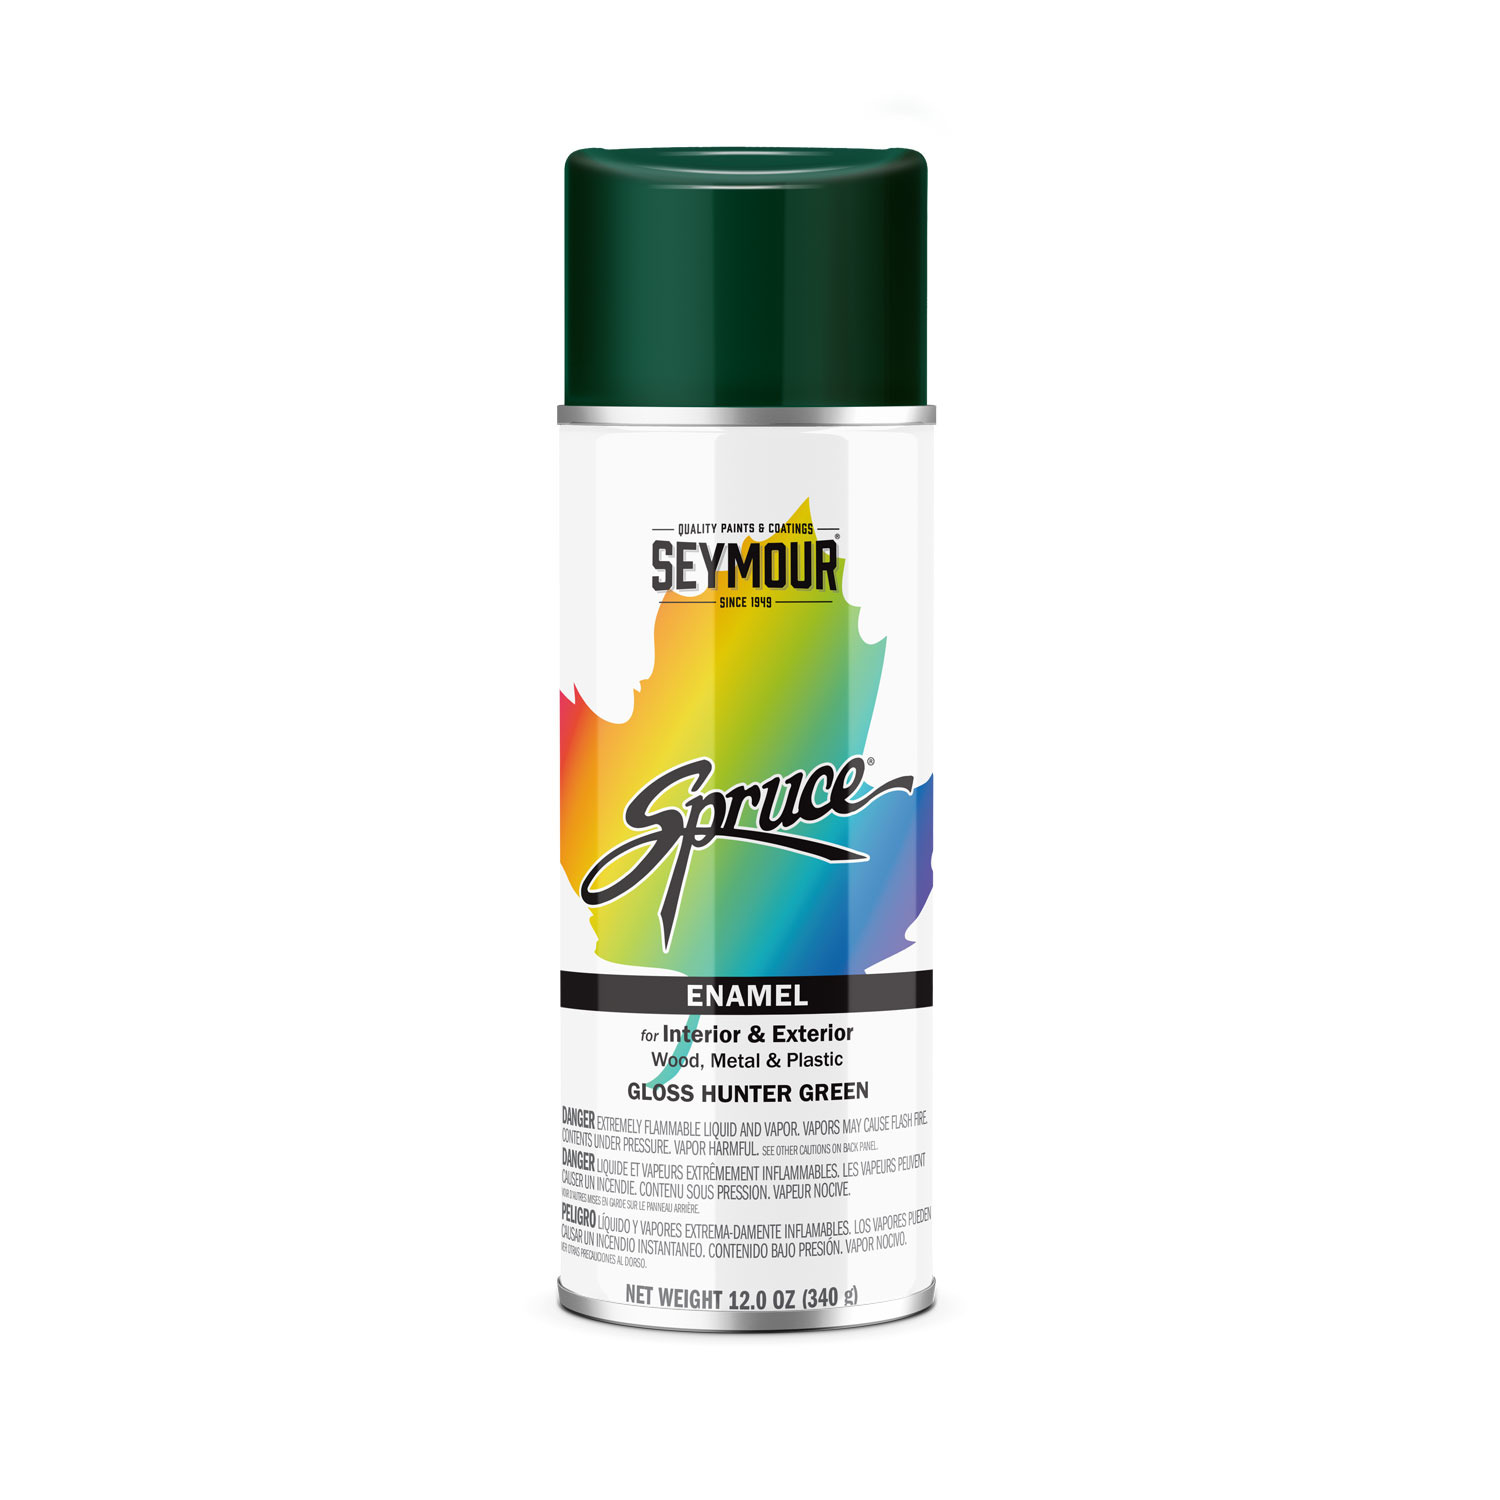 98-8 Seymour Spruce Enamel Spray Paint